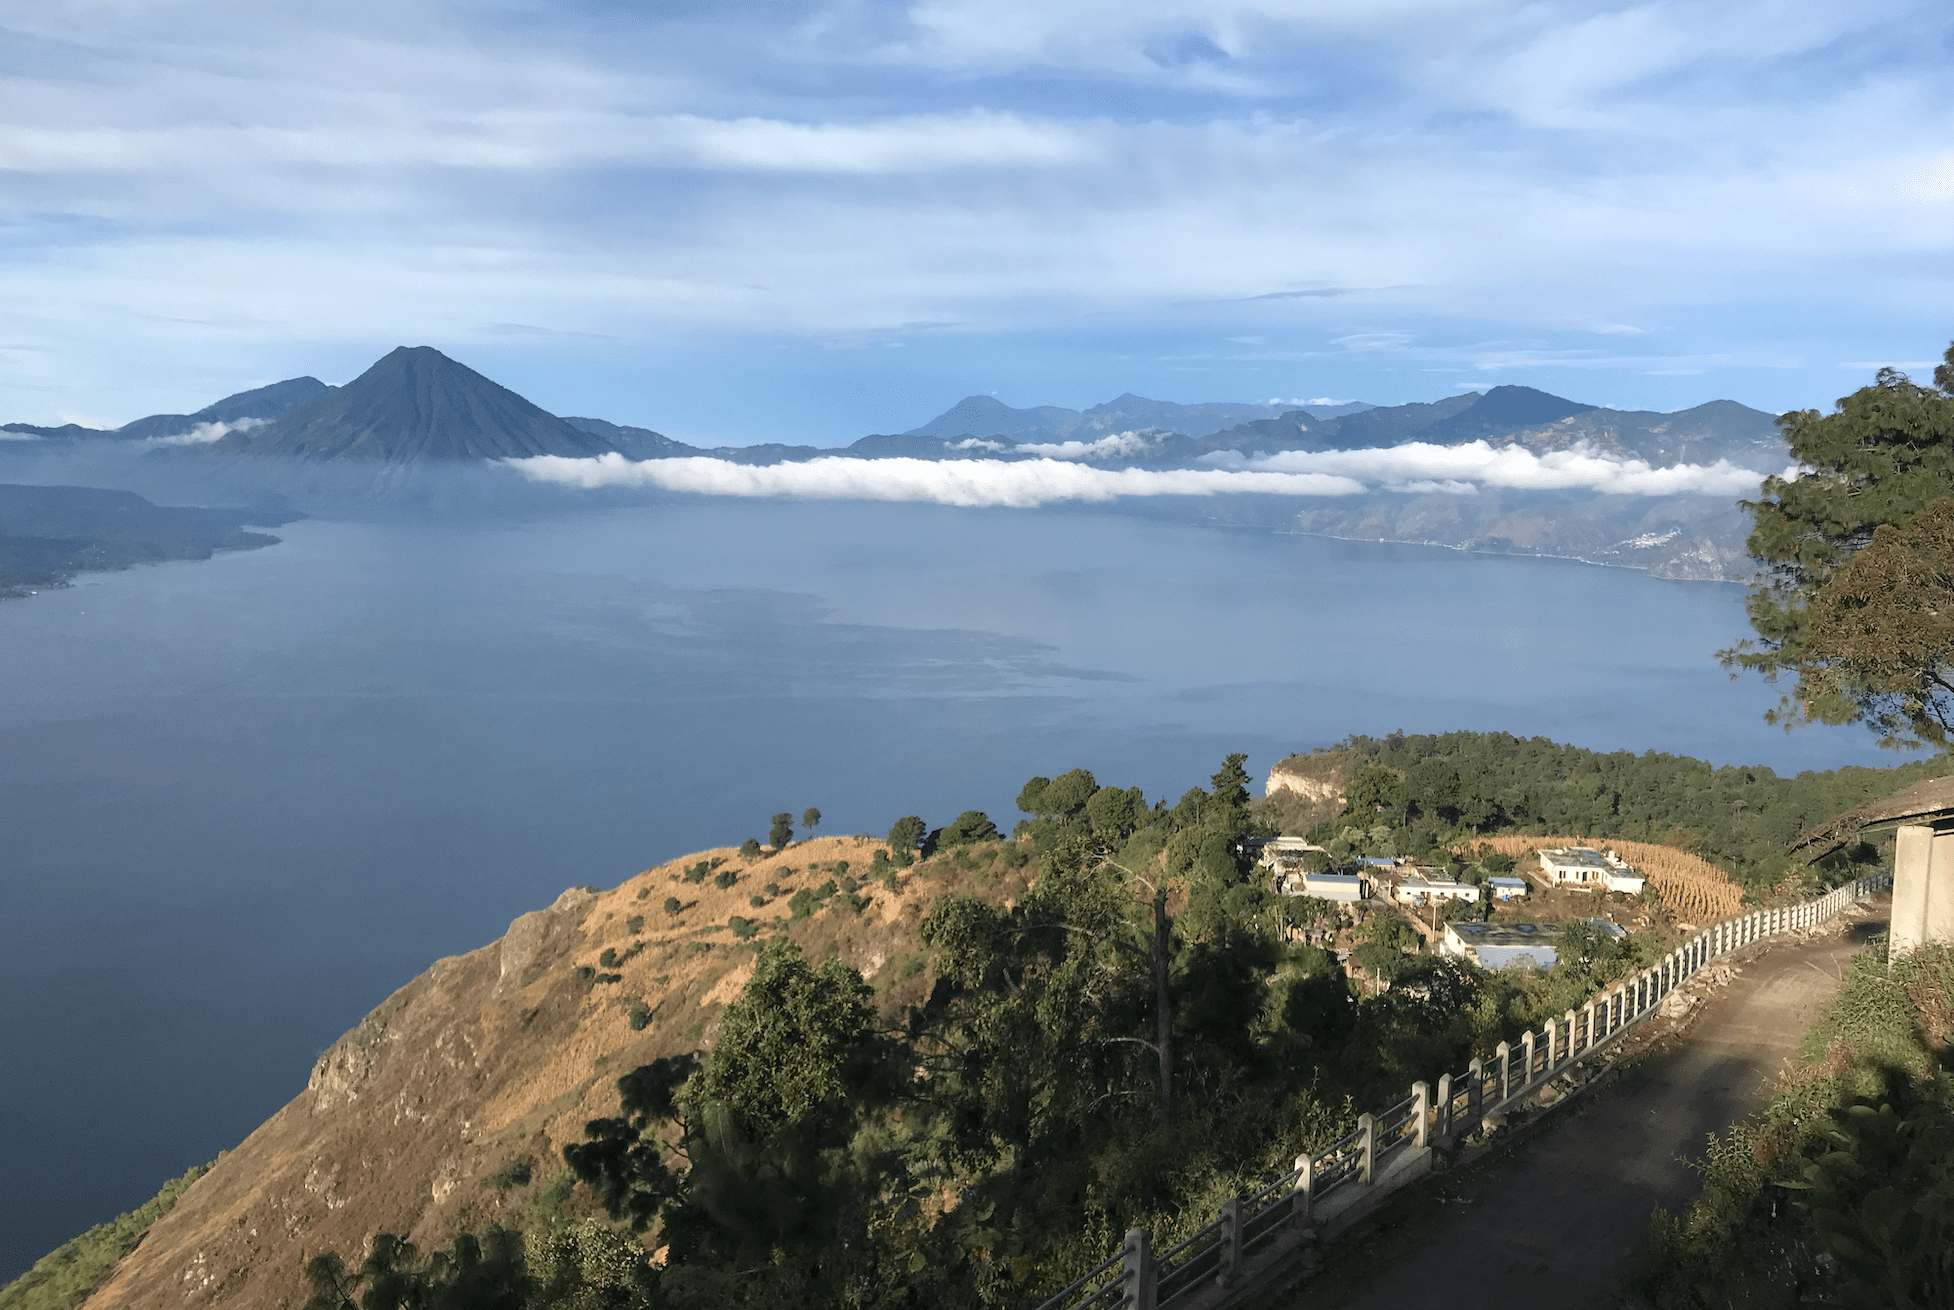 Amazing Lake Atitlan as seen from Mendez mirador.